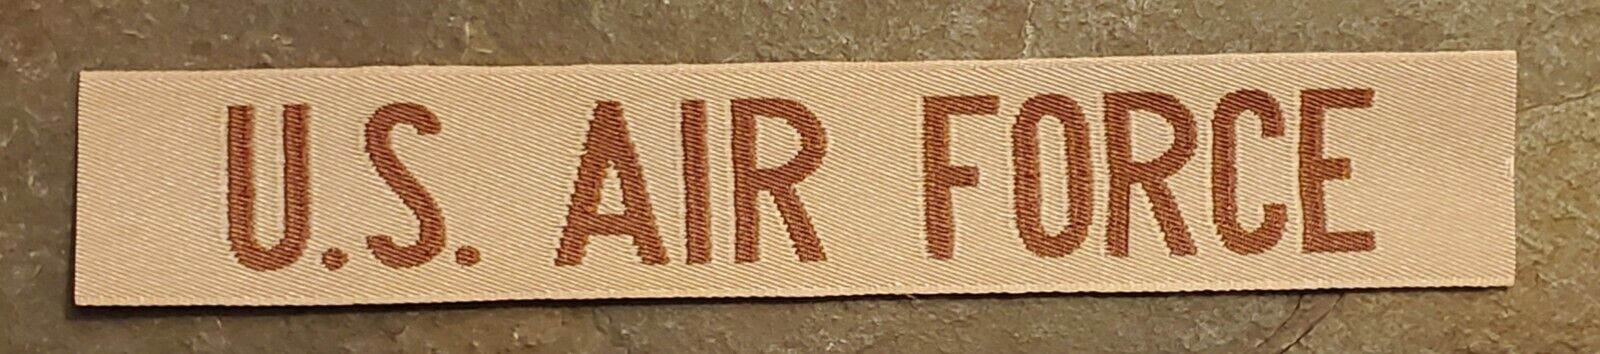 USAF U.S. AIR FORCE desert DCU Uniform TAN nylon name tape patch